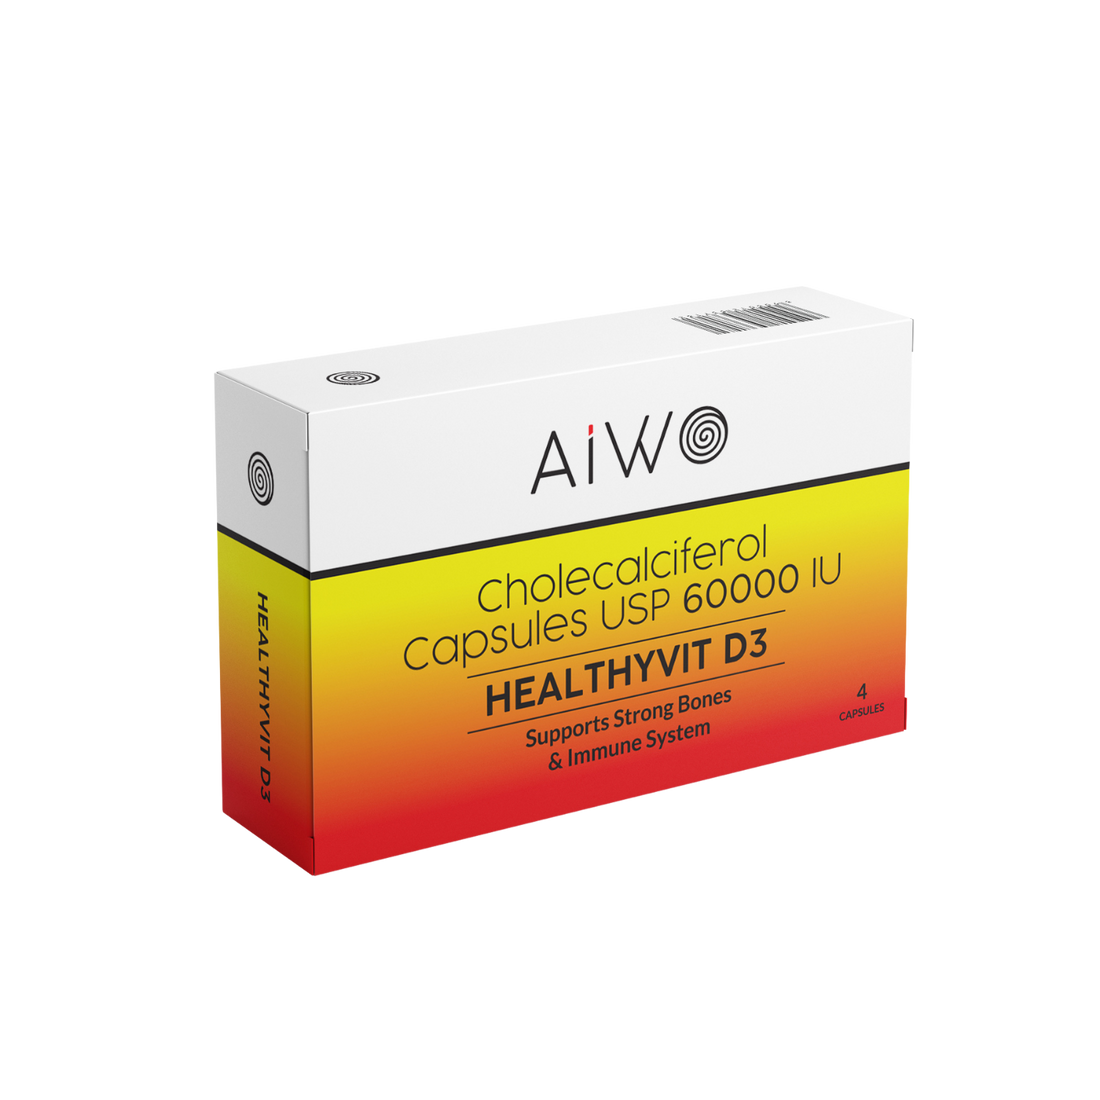 Aiwo HealthyVitD3 60000 IU Cholecalciferol Capsules